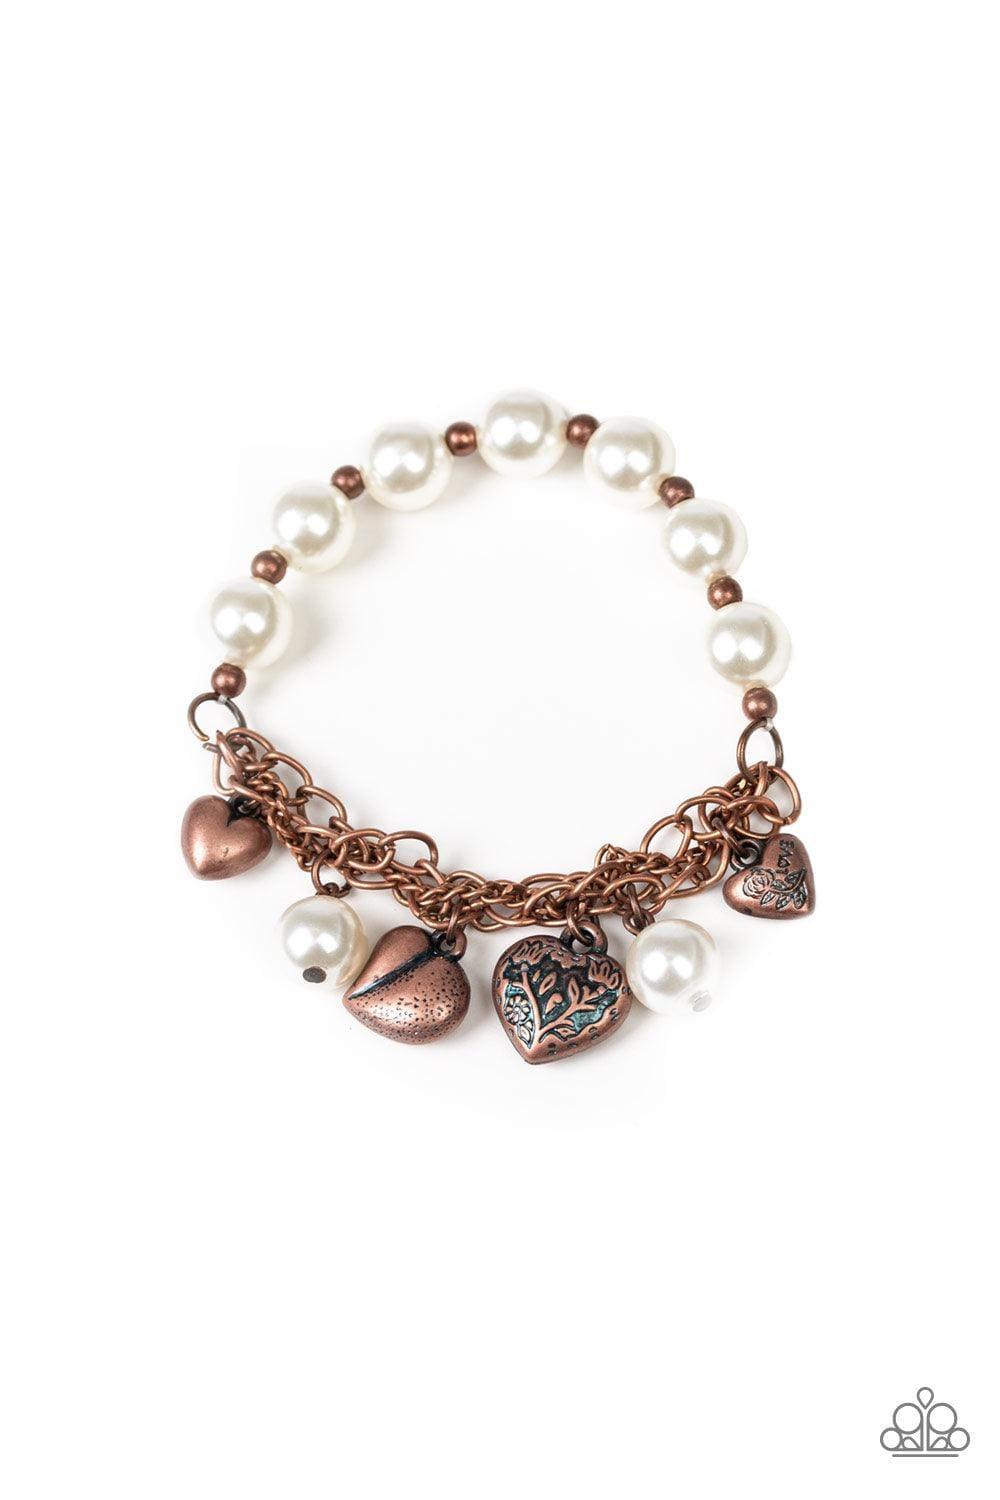 Paparazzi Accessories - More Amour - Copper Bracelet - Bling by JessieK